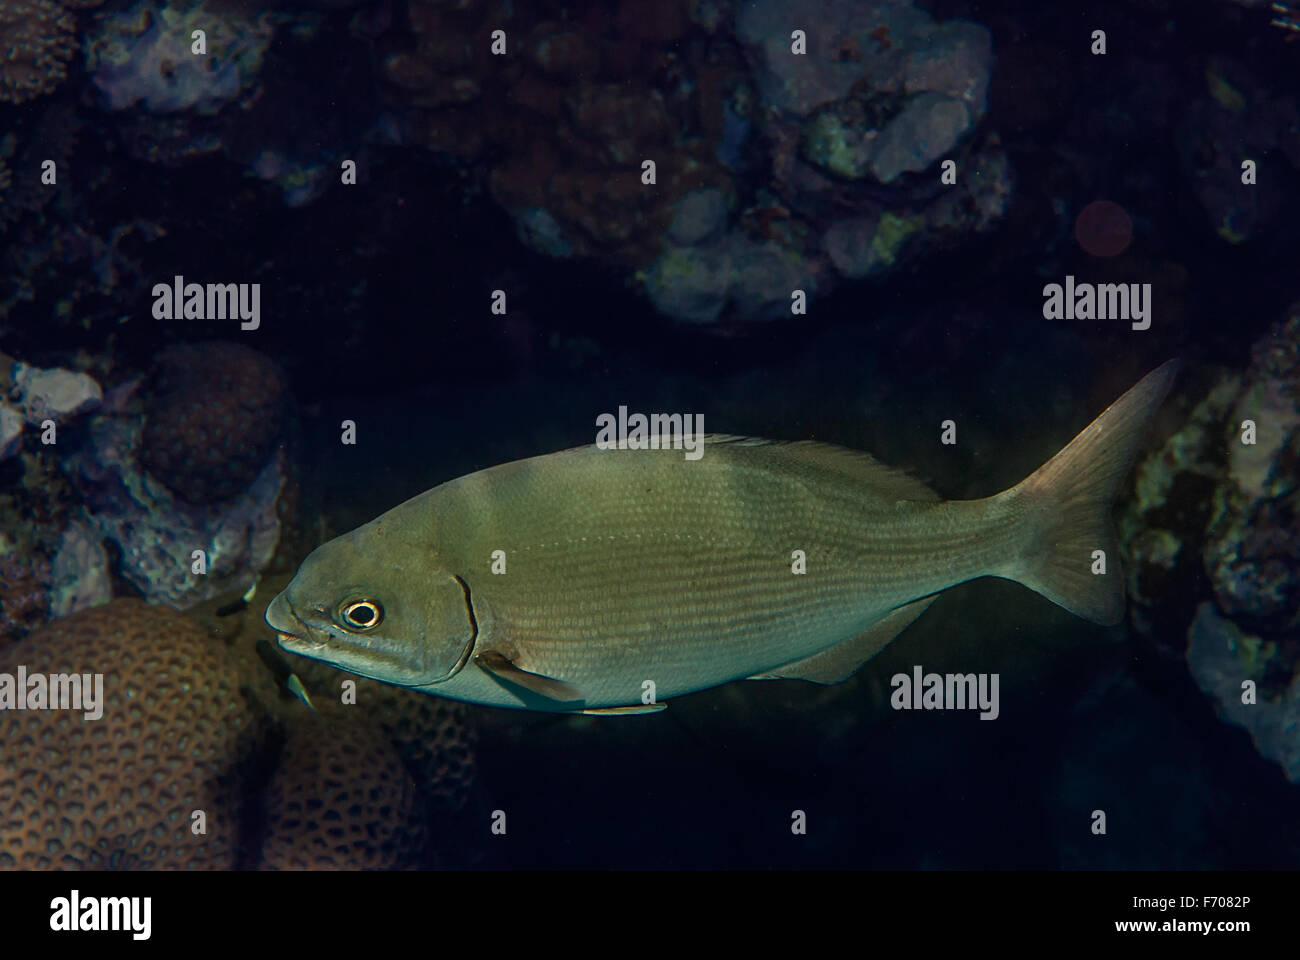 Snubnose rudderfish, Kyphosus cinerascens, Kyphosidae, Sharm el Sheikh, Red Sea, Egypt Stock Photo